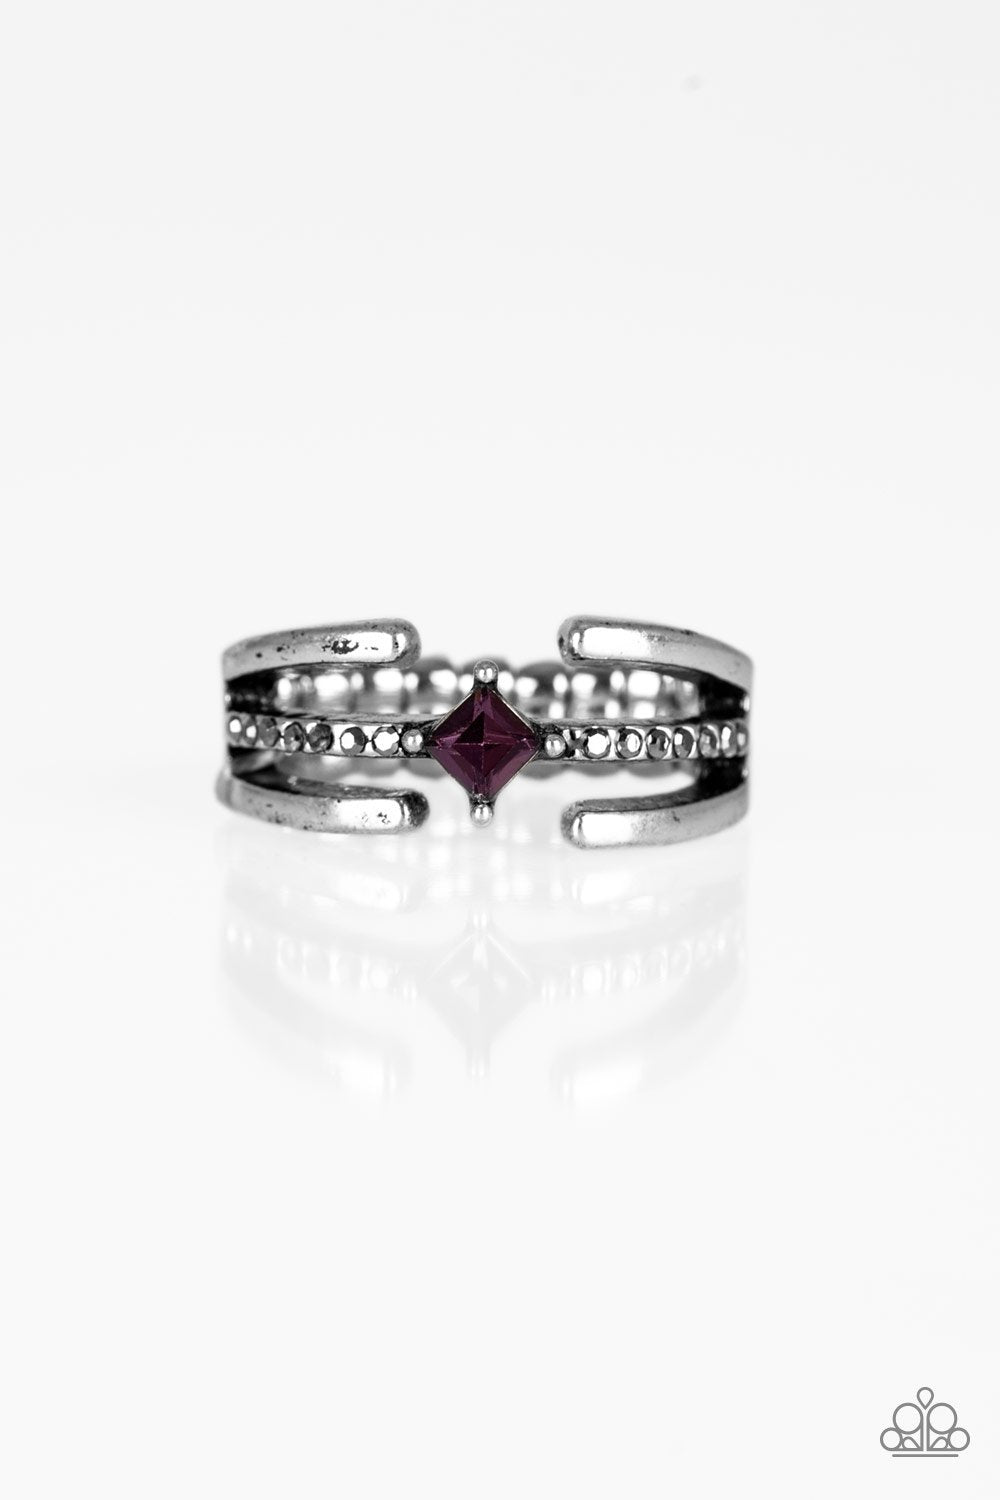 City Center Purple Rhinestone Ring - Paparazzi Accessories- lightbox - CarasShop.com - $5 Jewelry by Cara Jewels